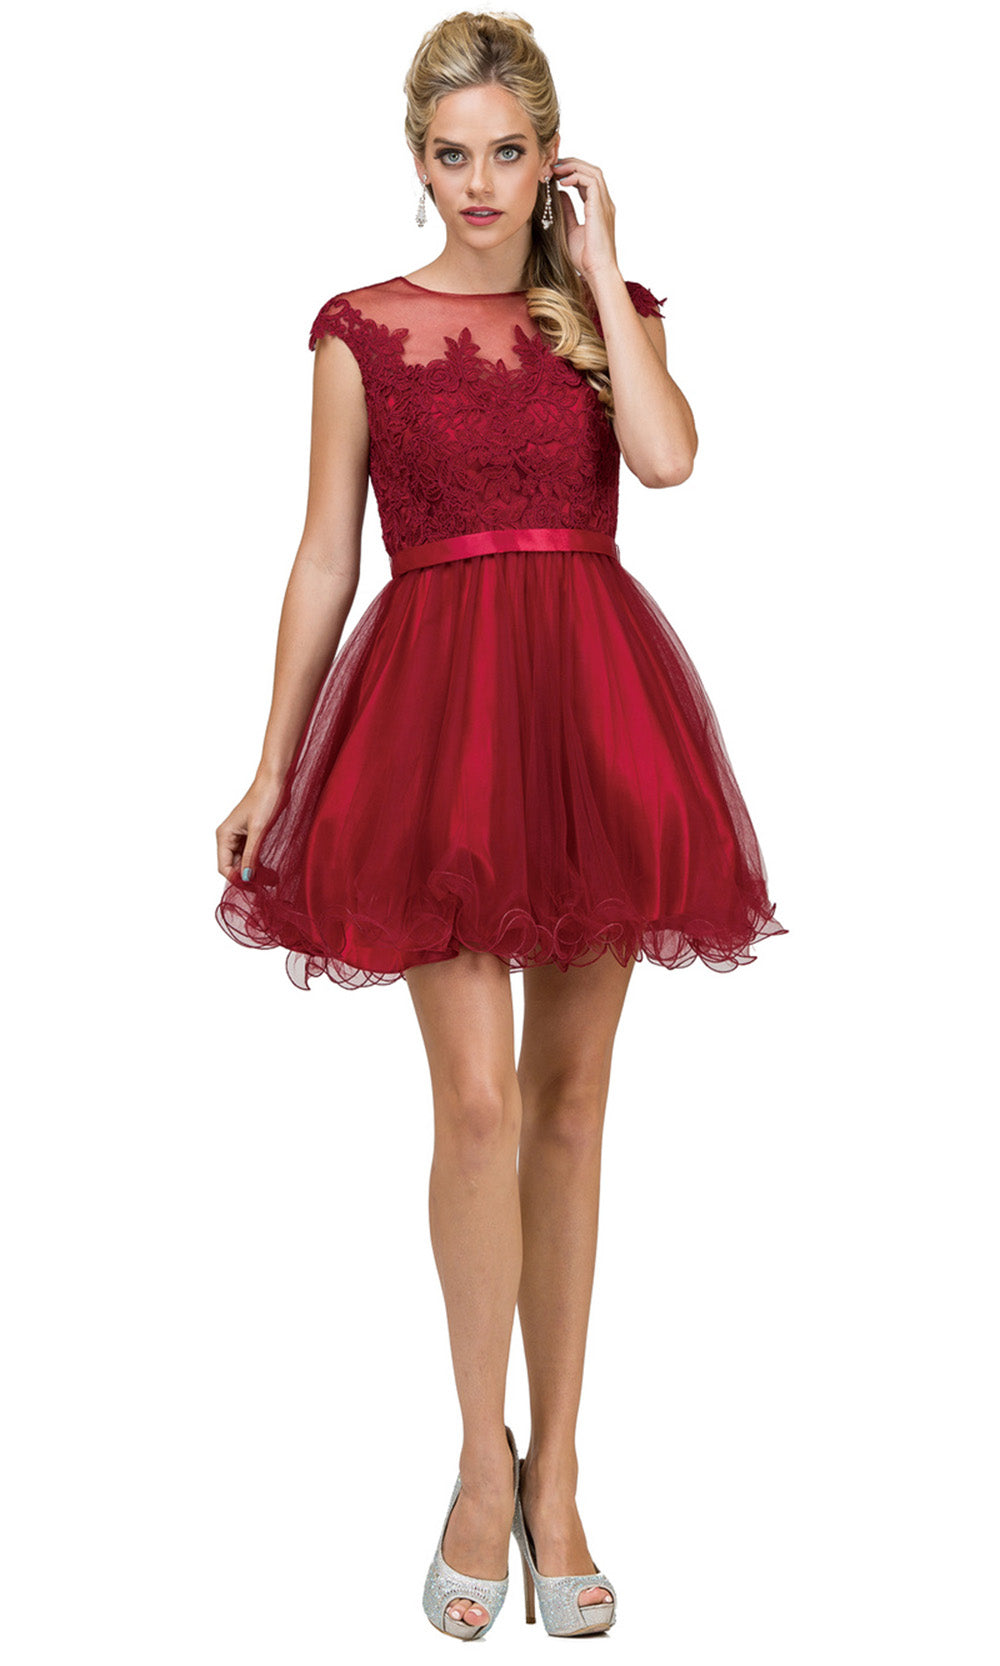 Dancing Queen - 2153 Illusion Neckline Lace Bodice A-Line Dress In Burgundygrade 8 grad dresses, graduation dresses